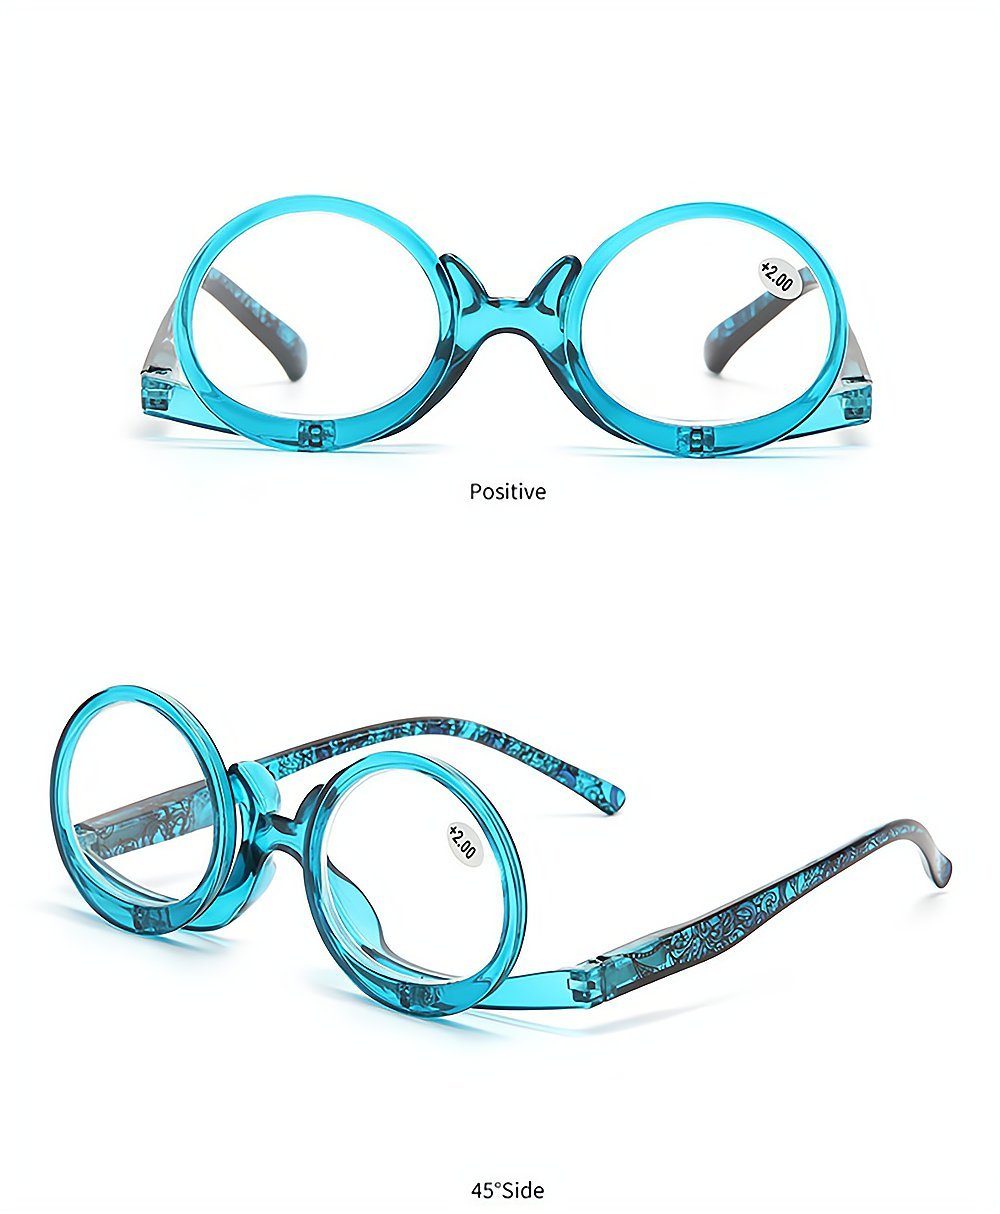 Lesebrille Mode Gläser PACIEA bedruckte Rahmen blaue presbyopische anti